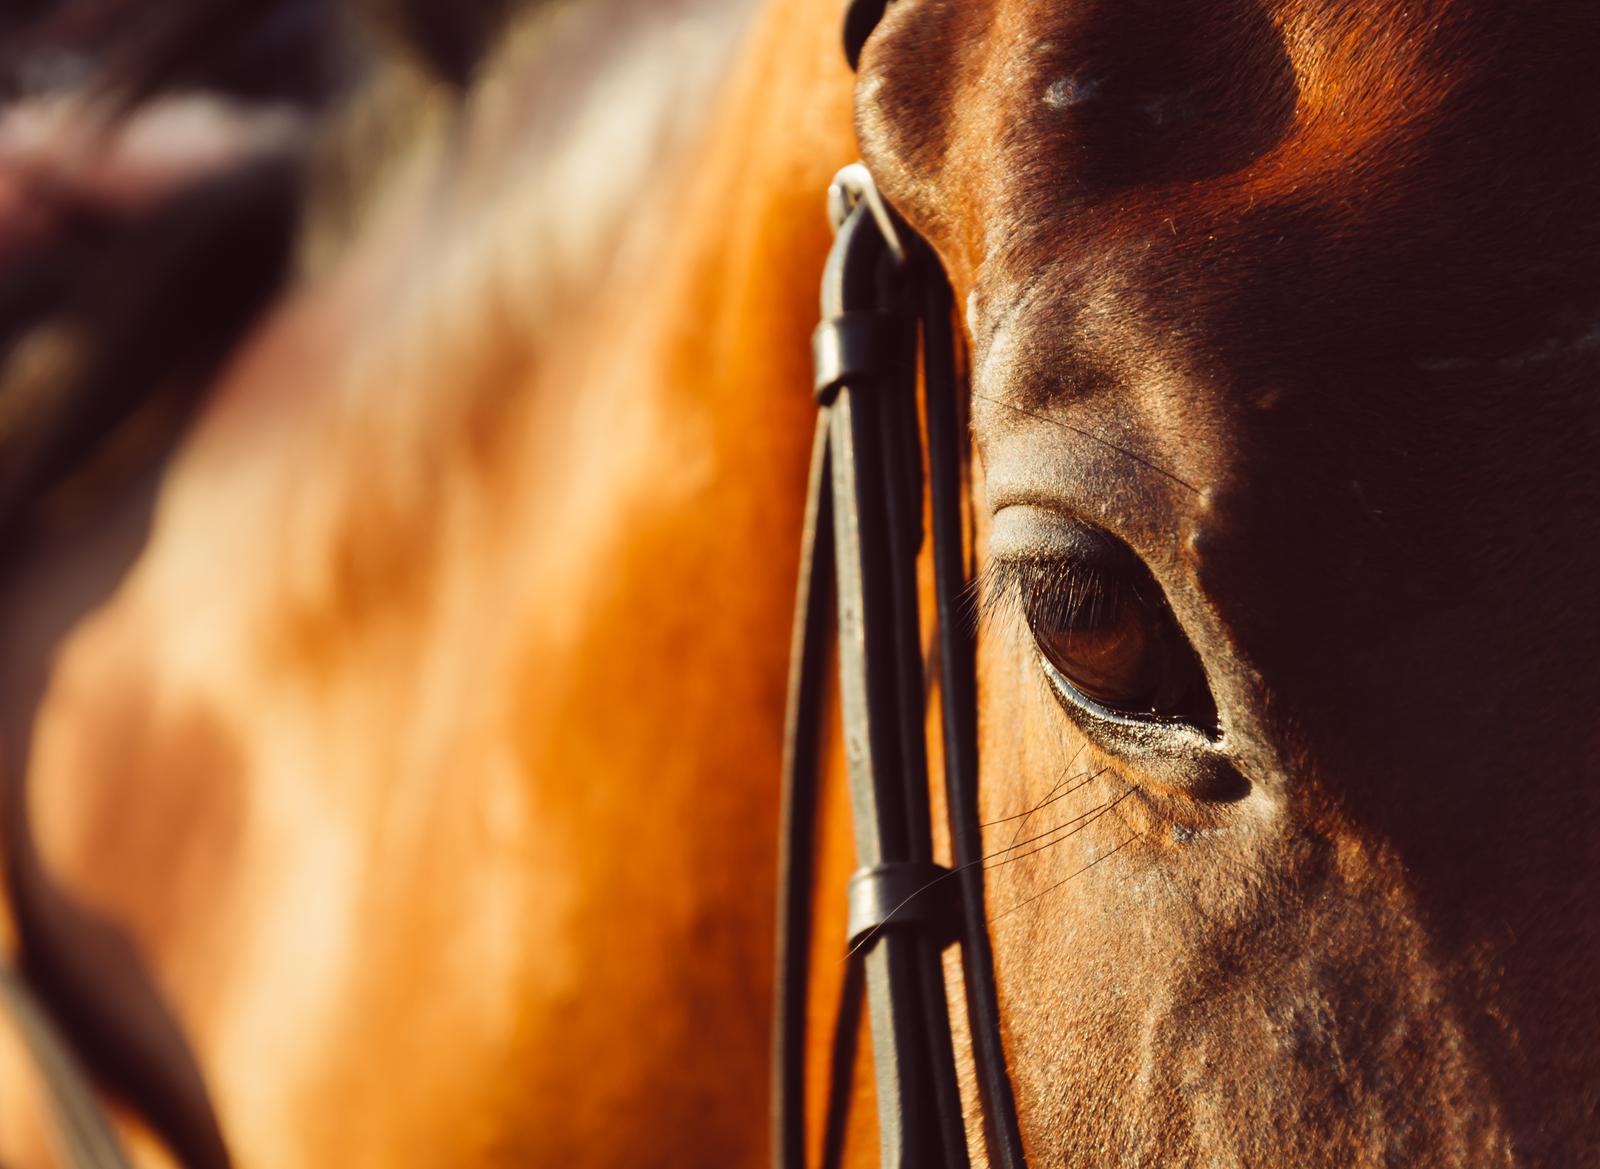 RENEE RAZUMOV FIE - Raising of horses and other equines in Pärnu county